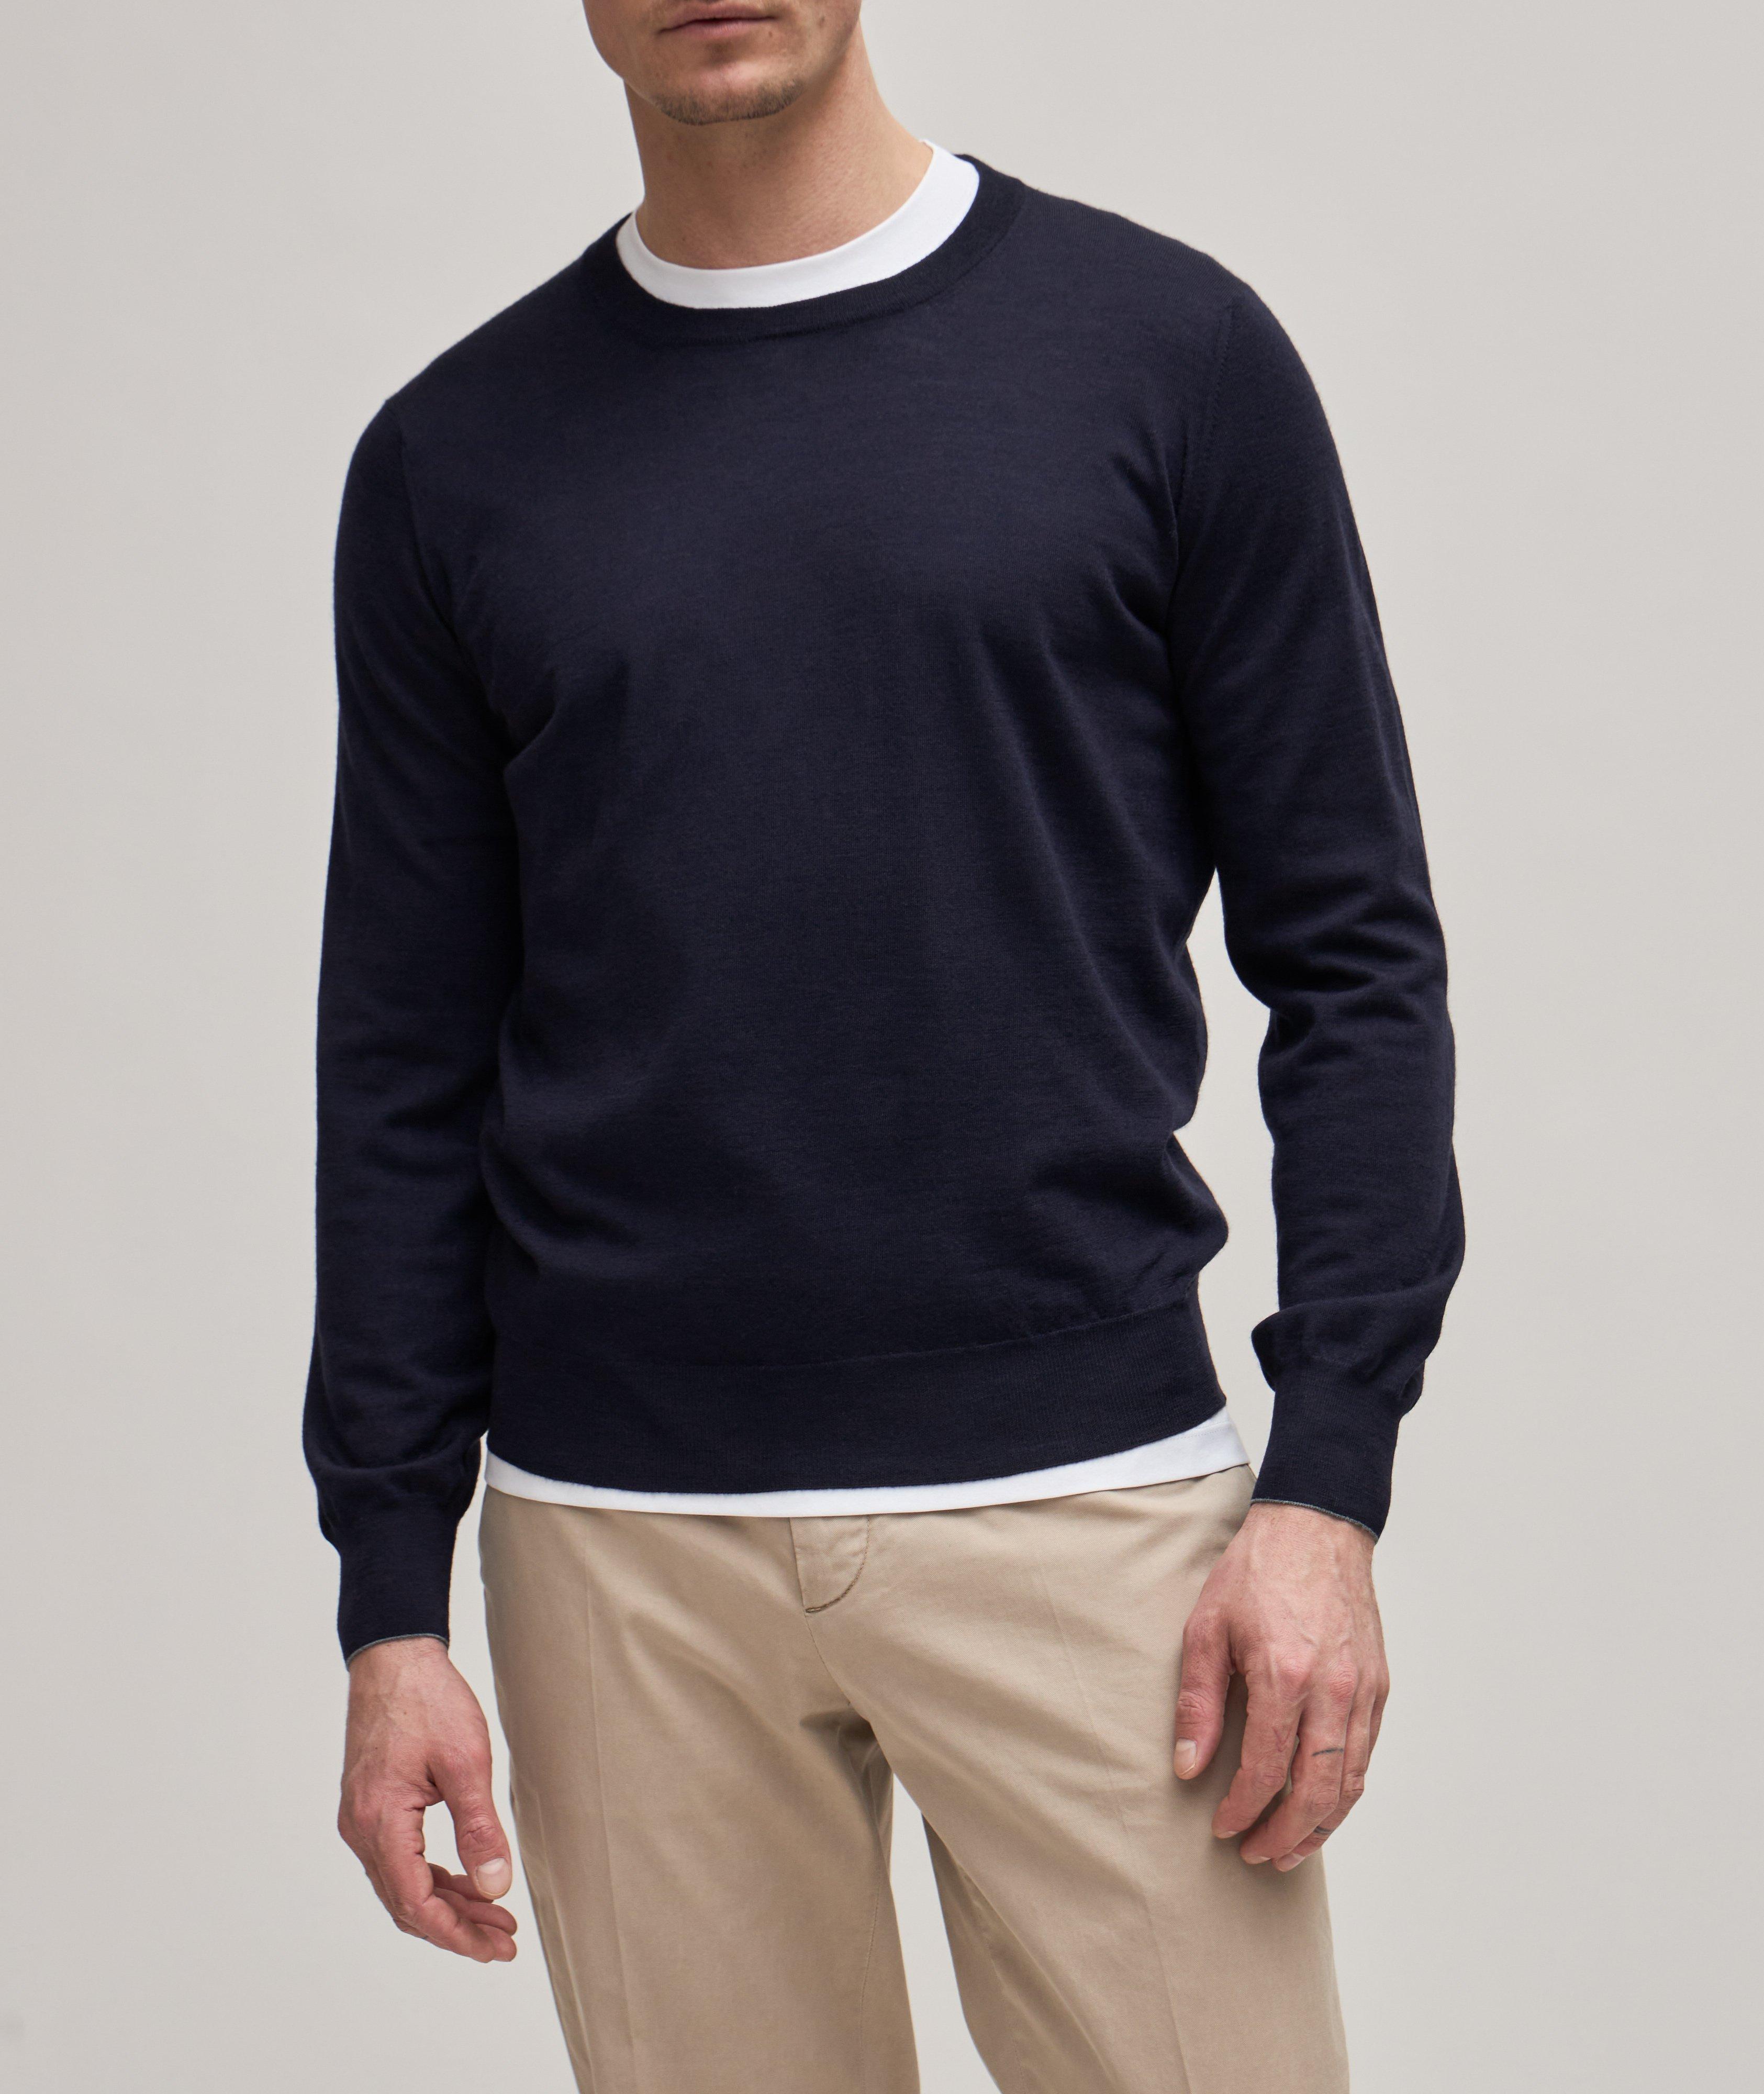 Wool-Cashmere Knit Crewneck Sweater image 1